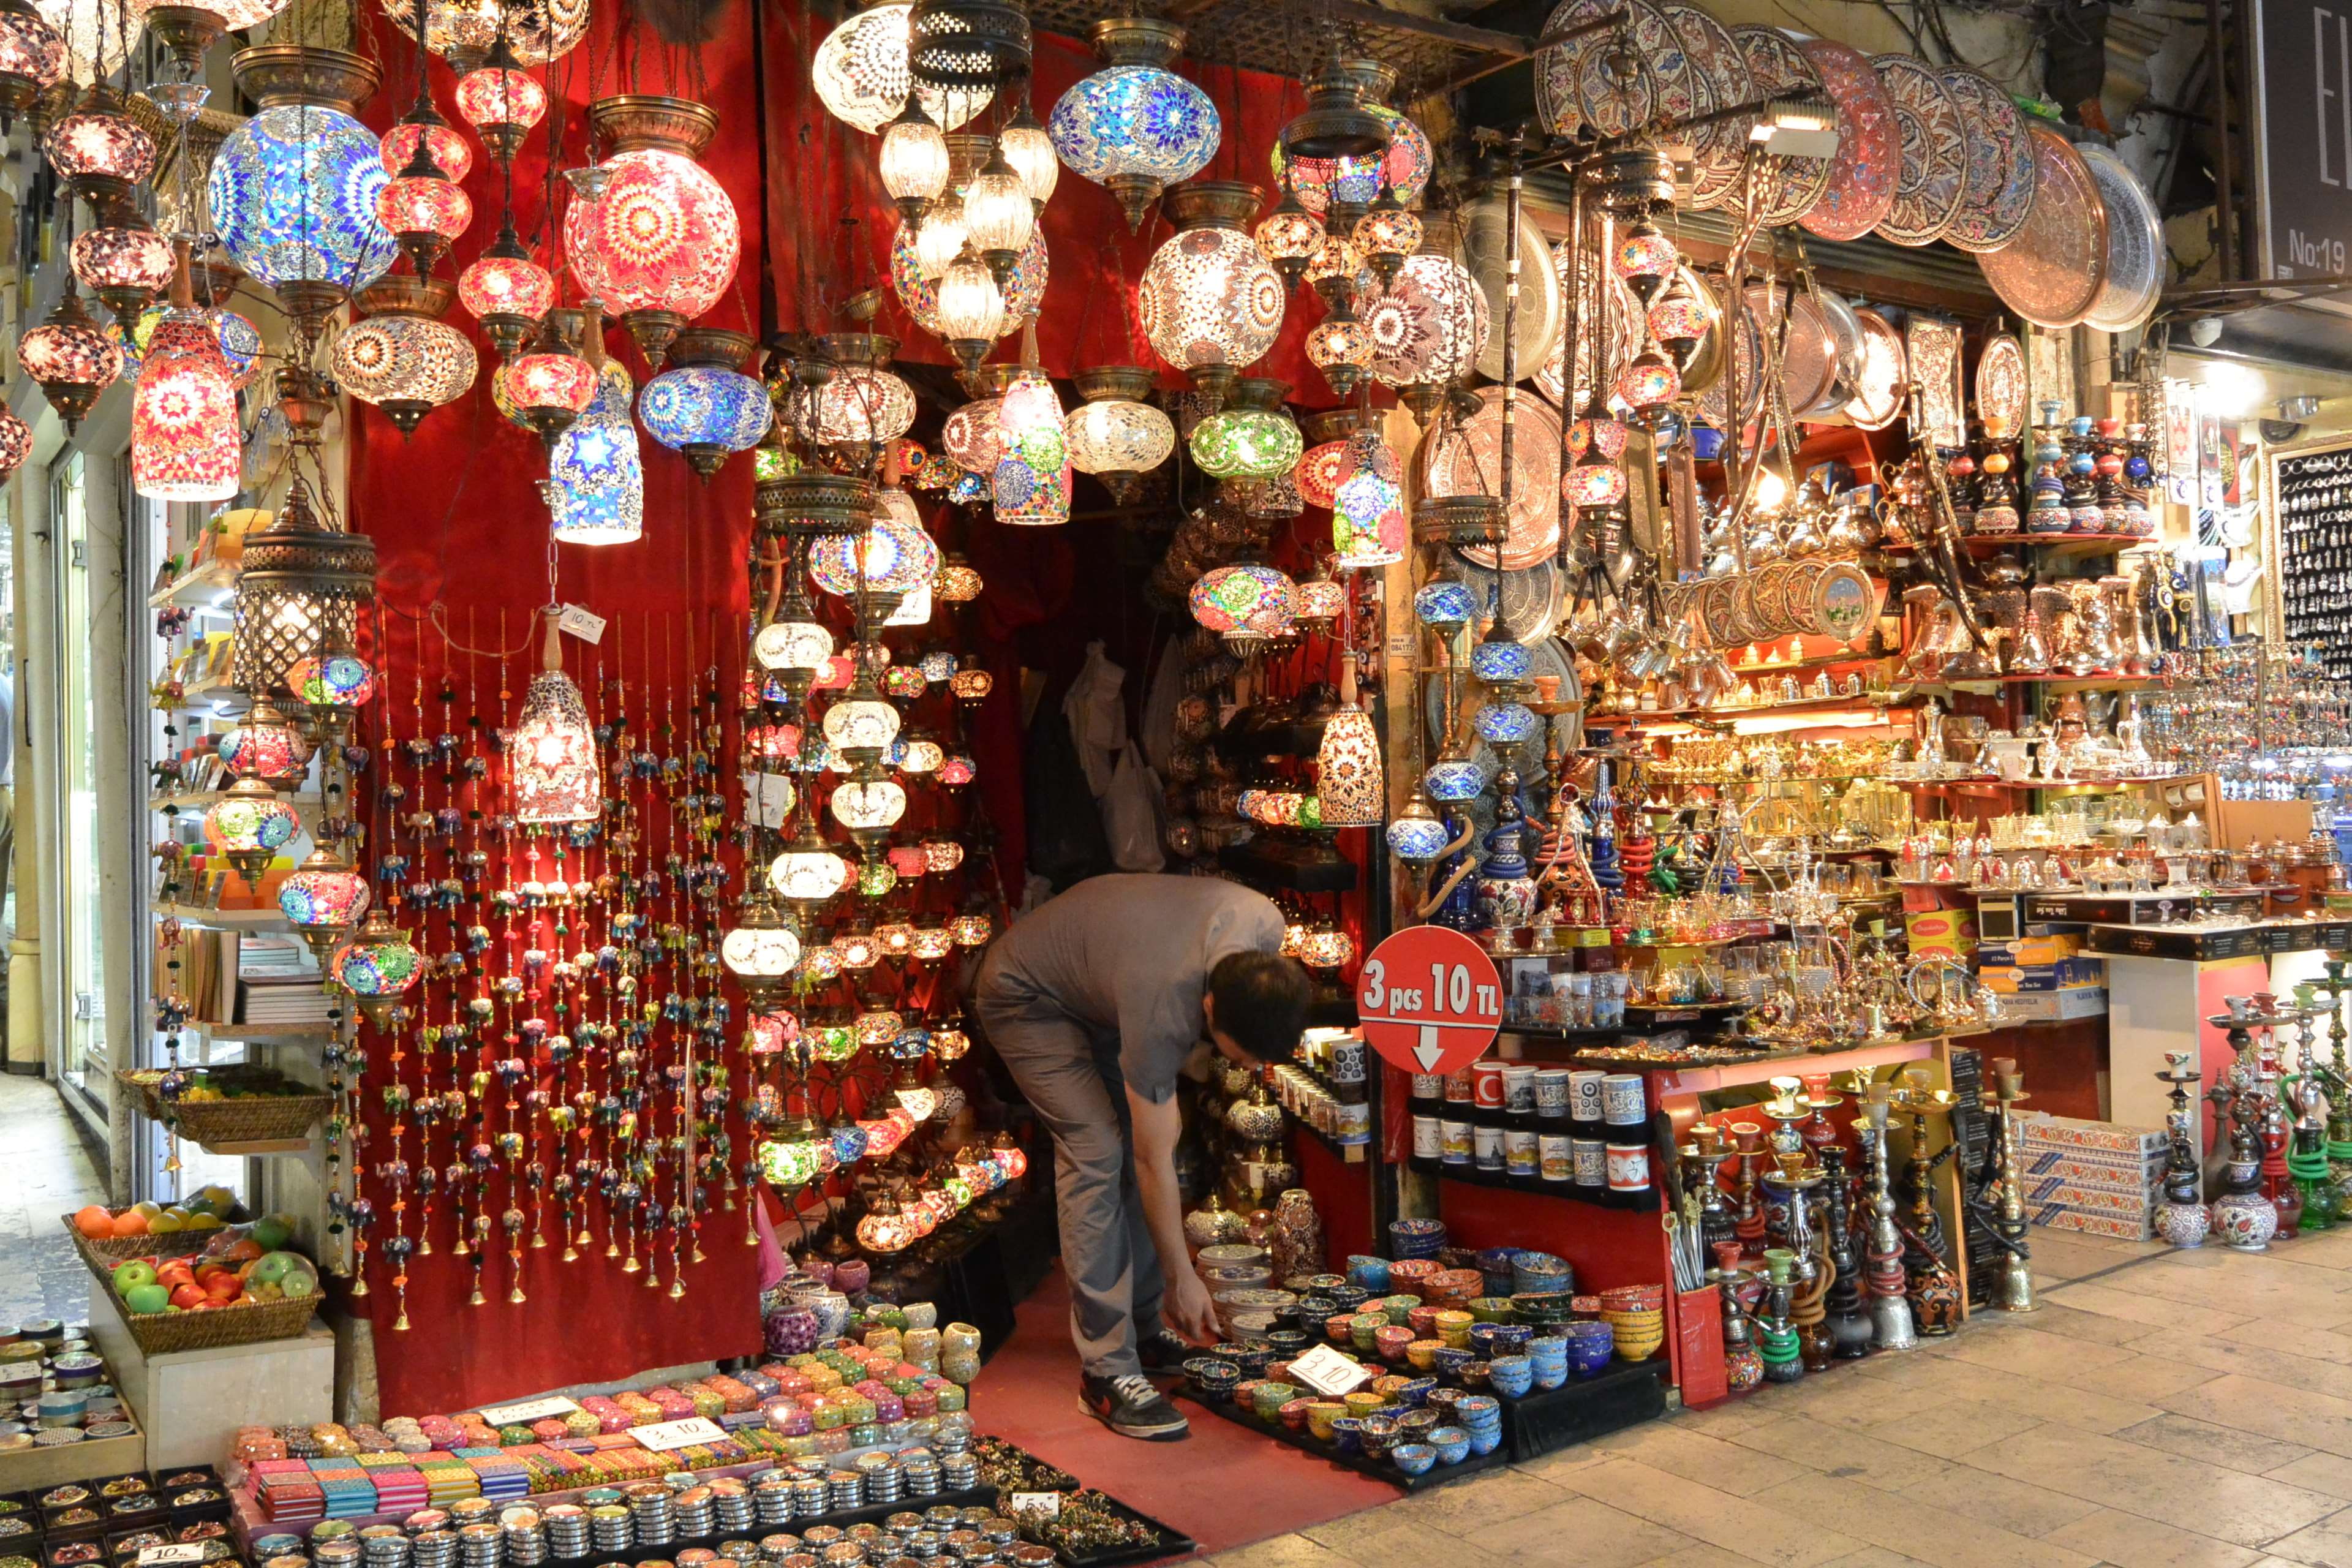 bazaar, east, exotic, flea market, shop, street market, retail